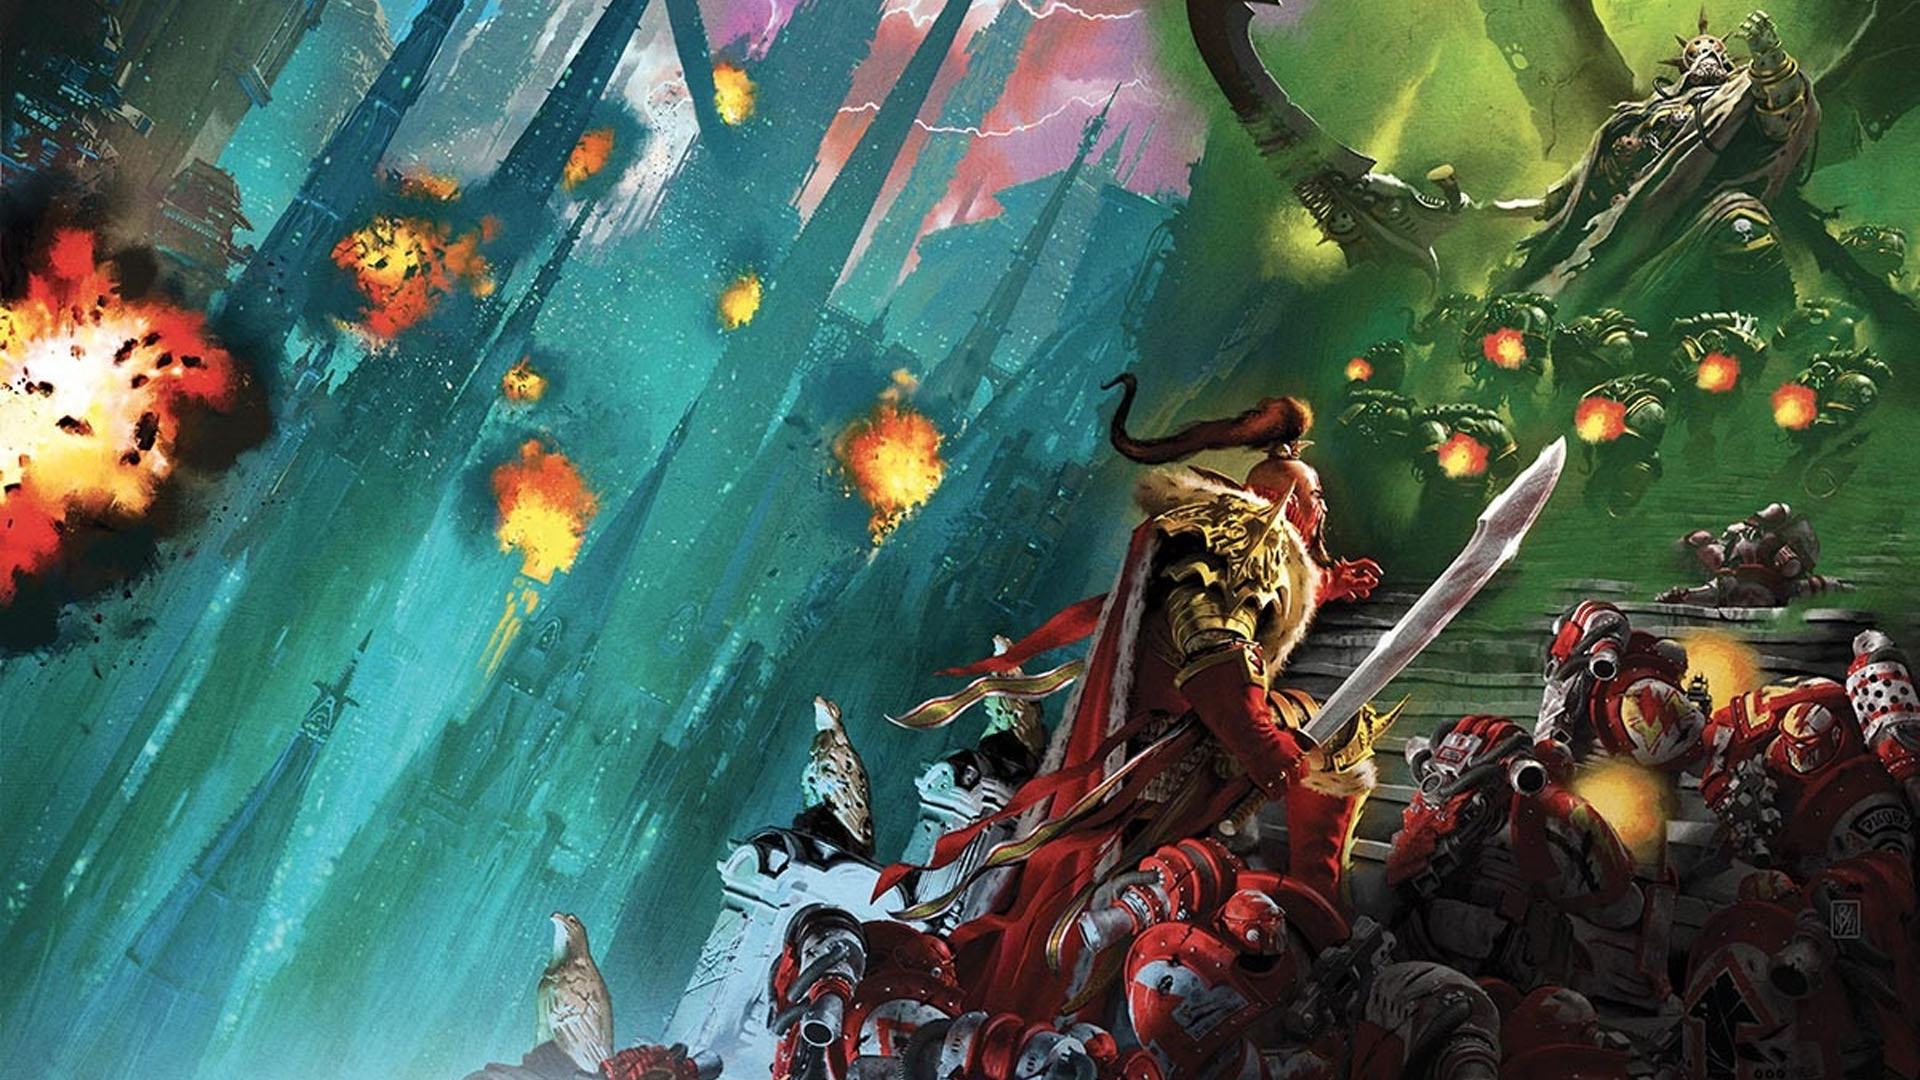 Warhammer 40k Jaghatai Khan guide - Warhammer Community image showing Jaghatai Khan fighting at the Siege of Terra